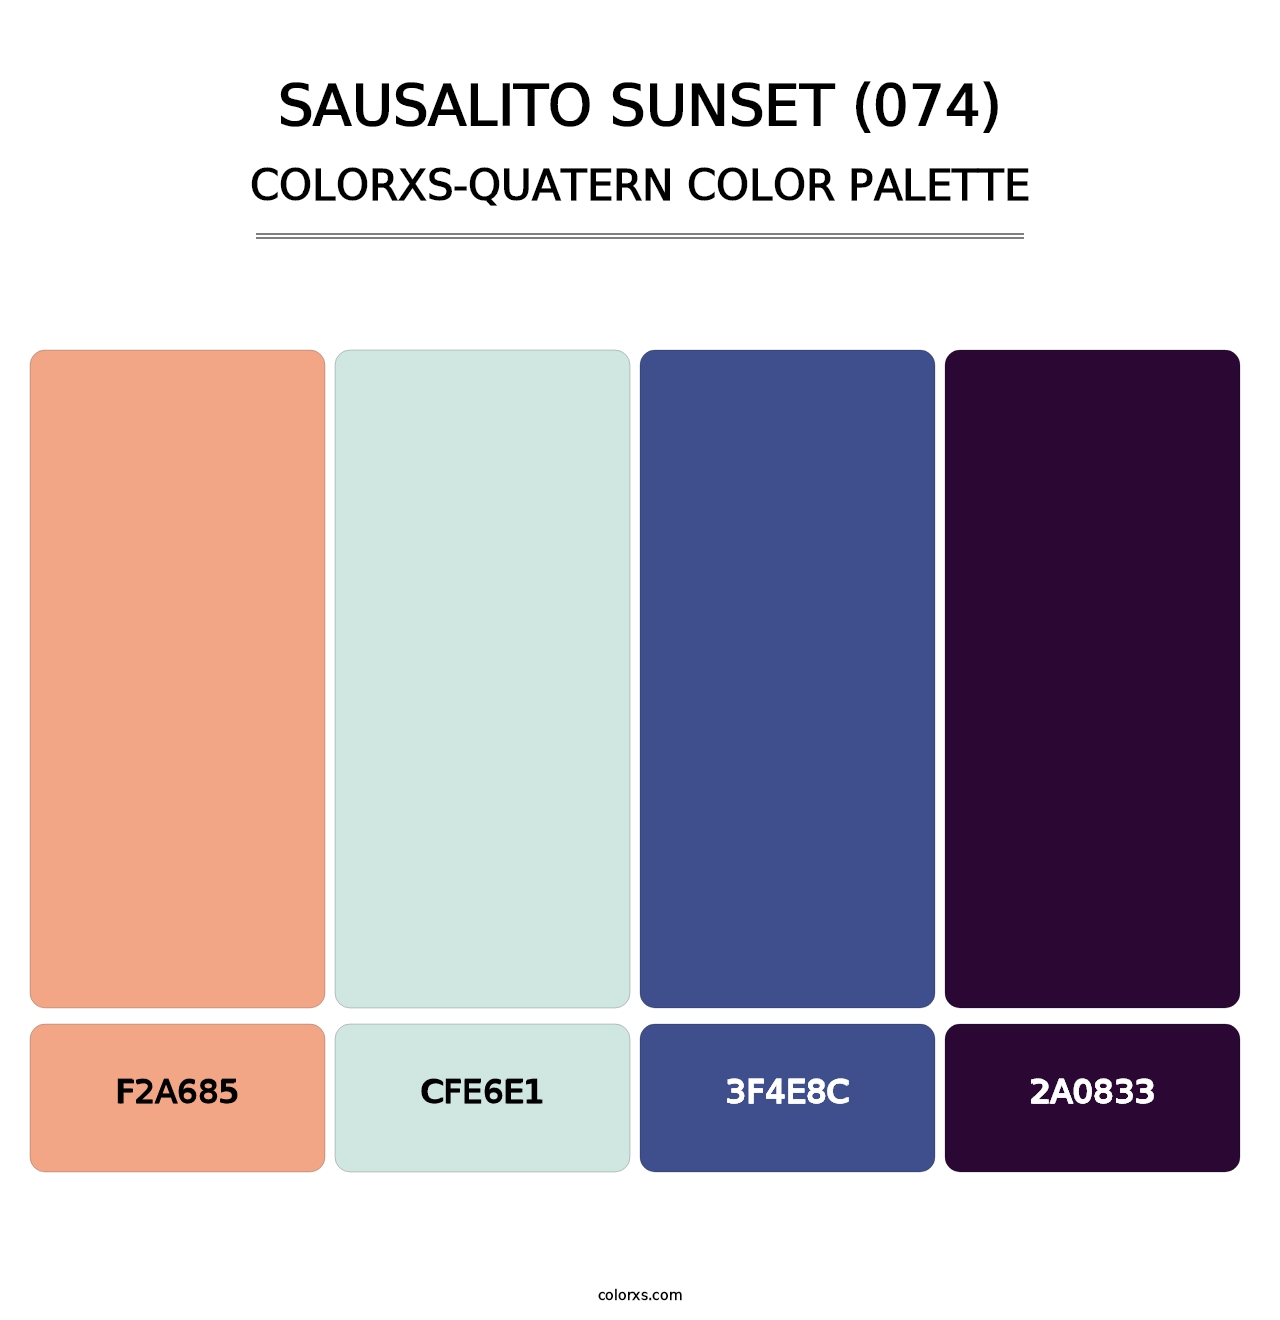 Sausalito Sunset (074) - Colorxs Quatern Palette